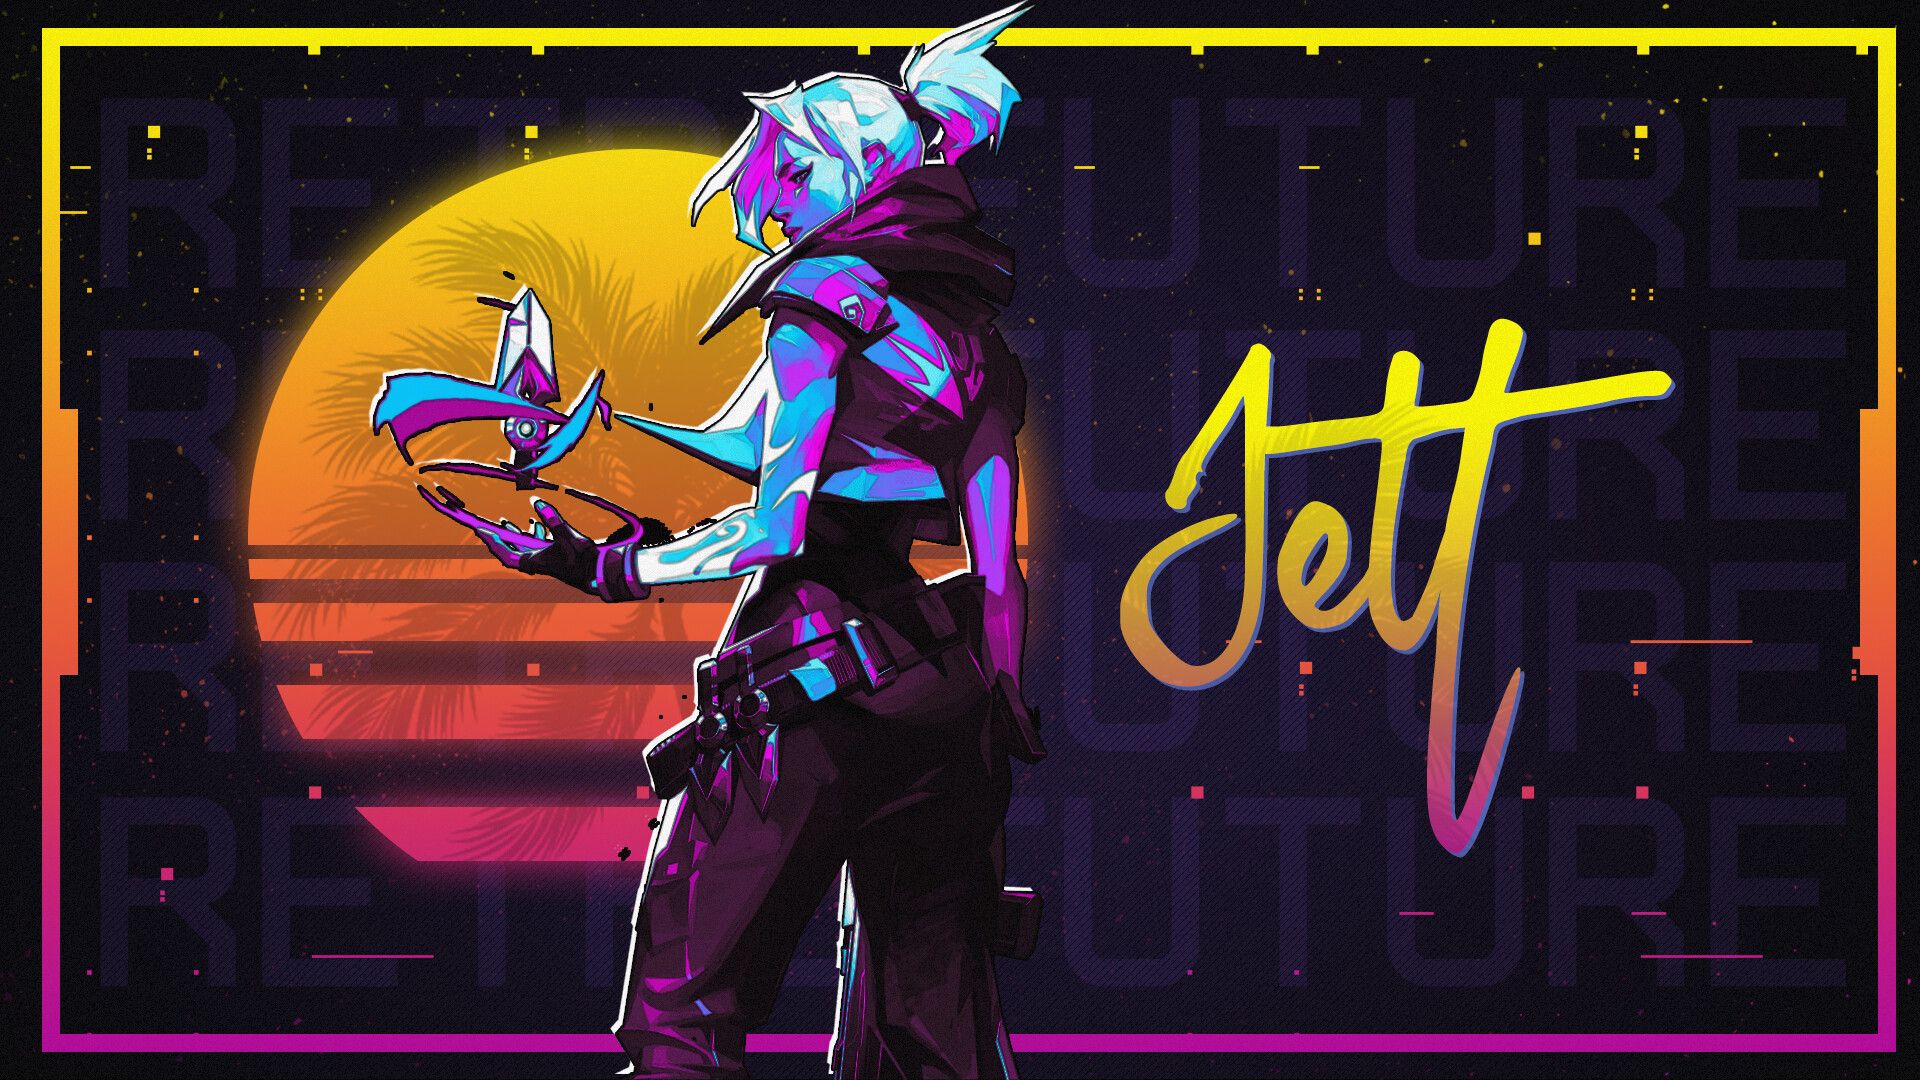 Jett Valorant Neon Art Wallpaper, HD Games 4K Wallpapers, Image, Photos and...